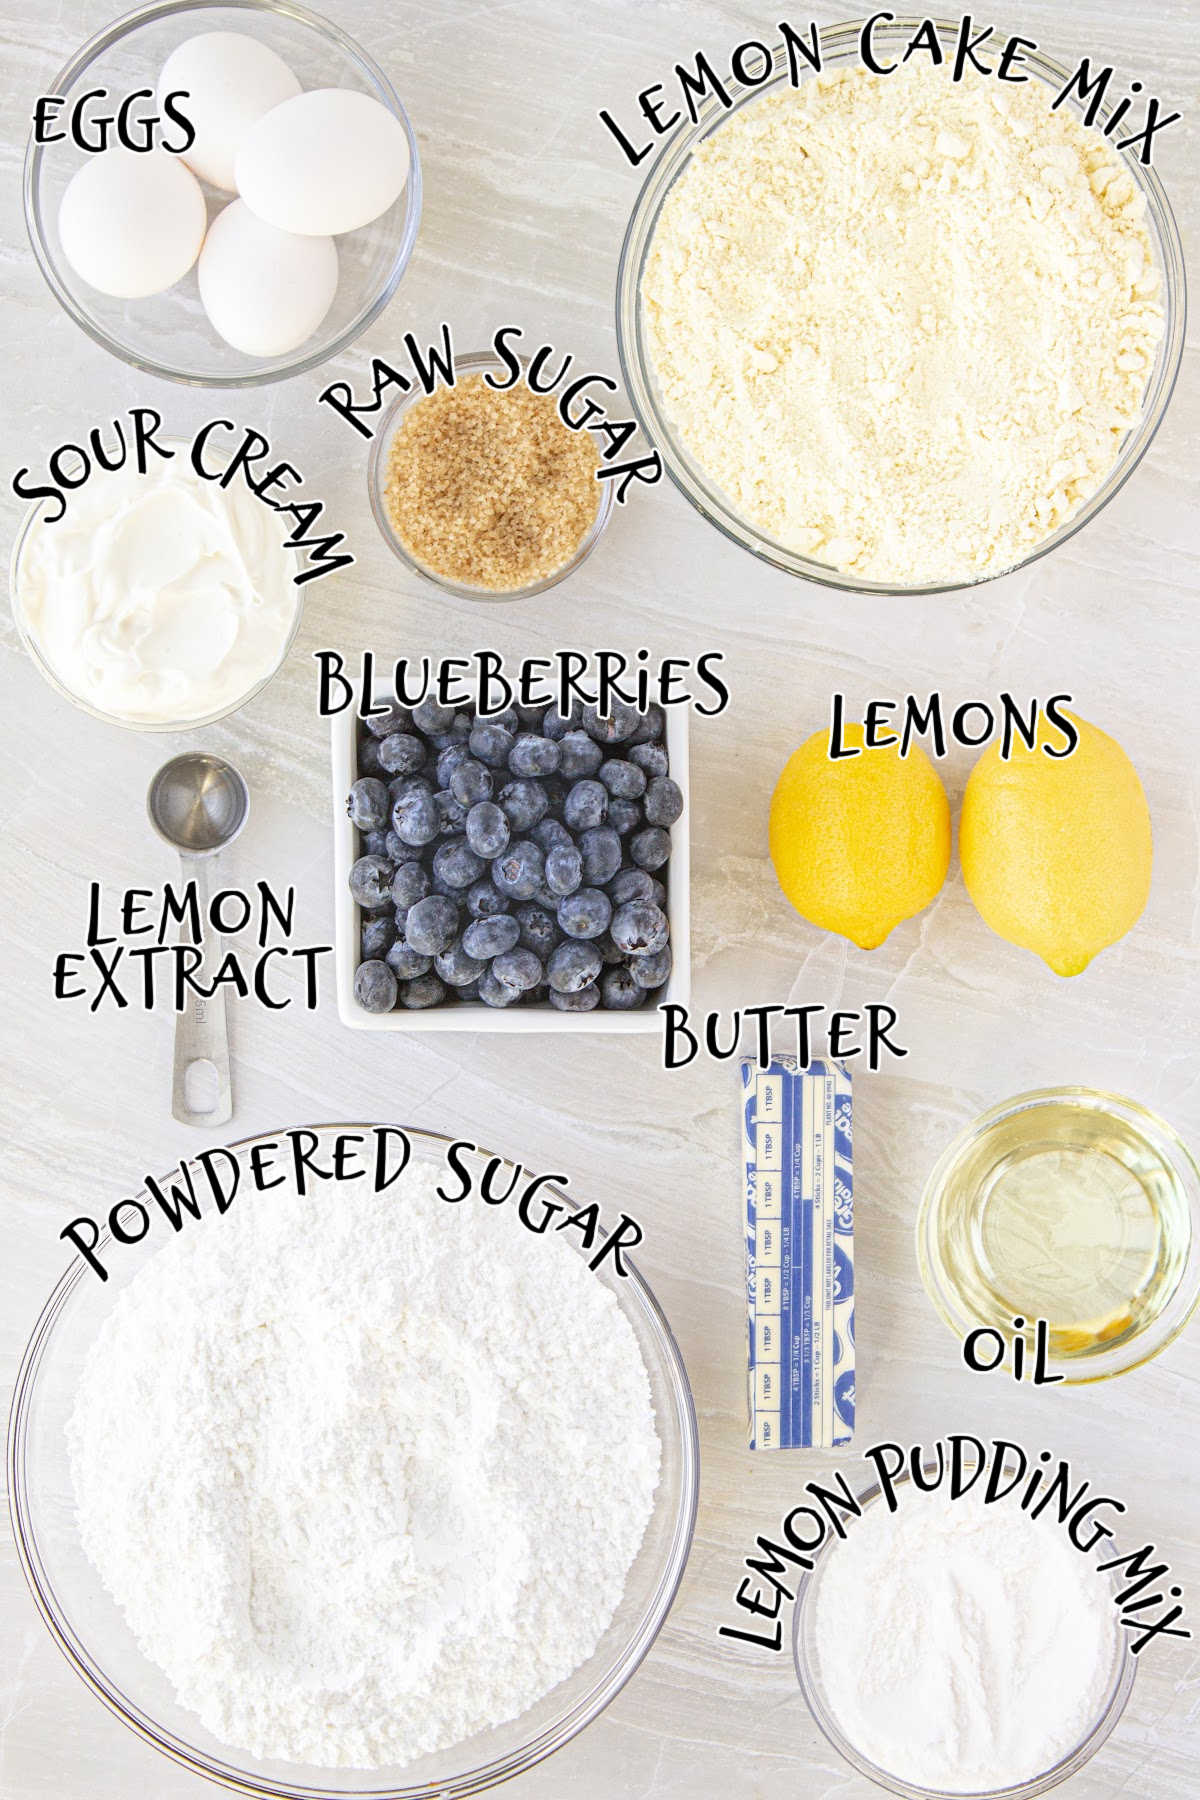 Ingredients for lemon blueberry bundt cake.